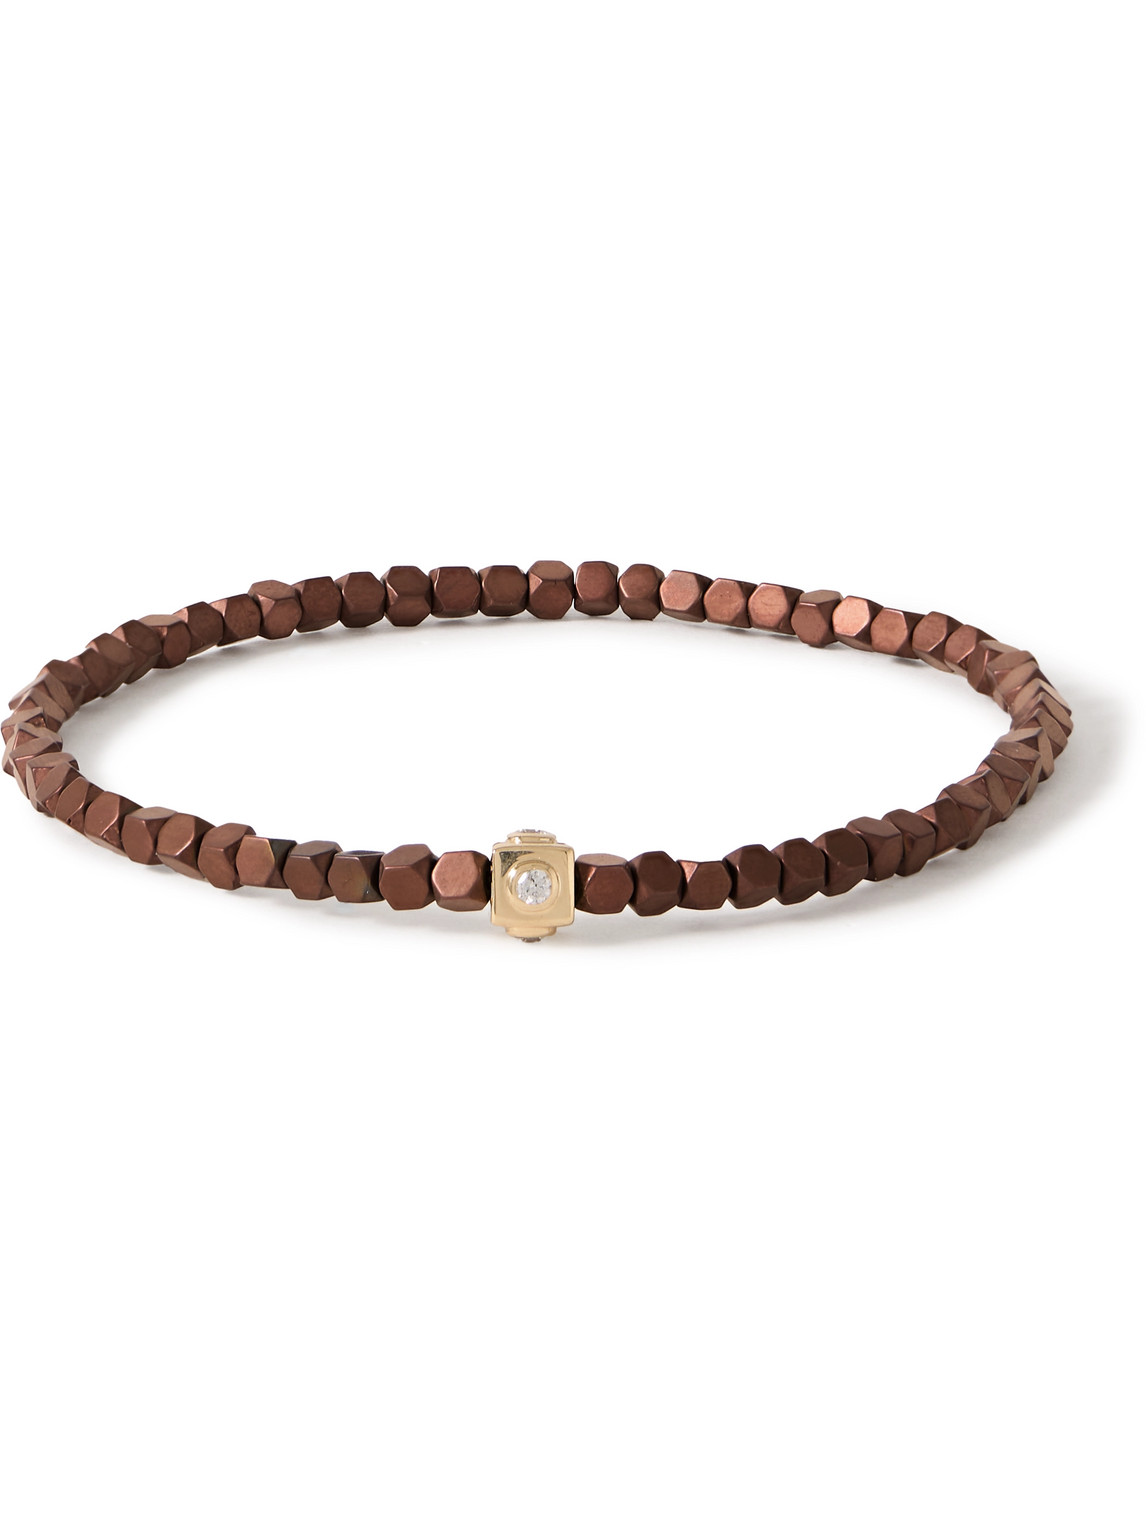 Luis Morais Gold, Hematite And Diamond Beaded Bracelet In Brown